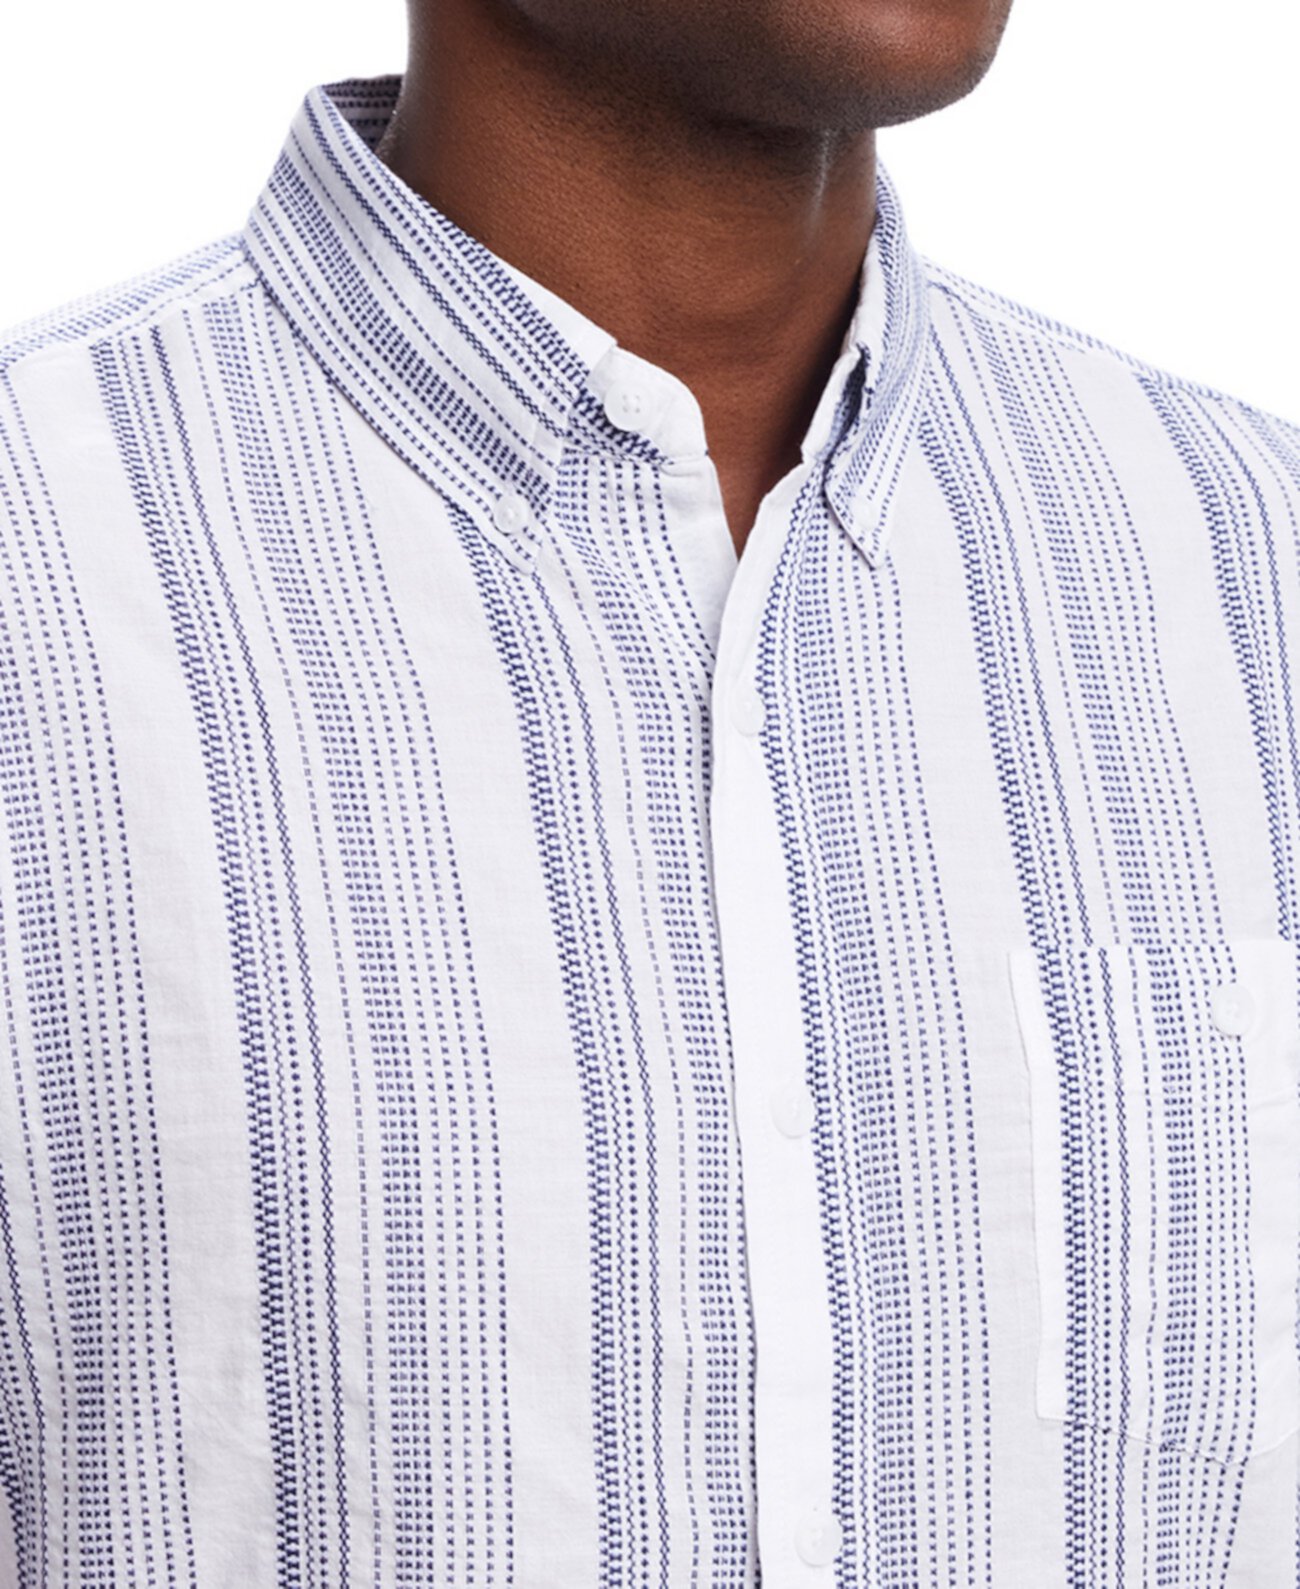 Men's Short Sleeve Cotton Shirt with Ticking Stripe Weatherproof Vintage